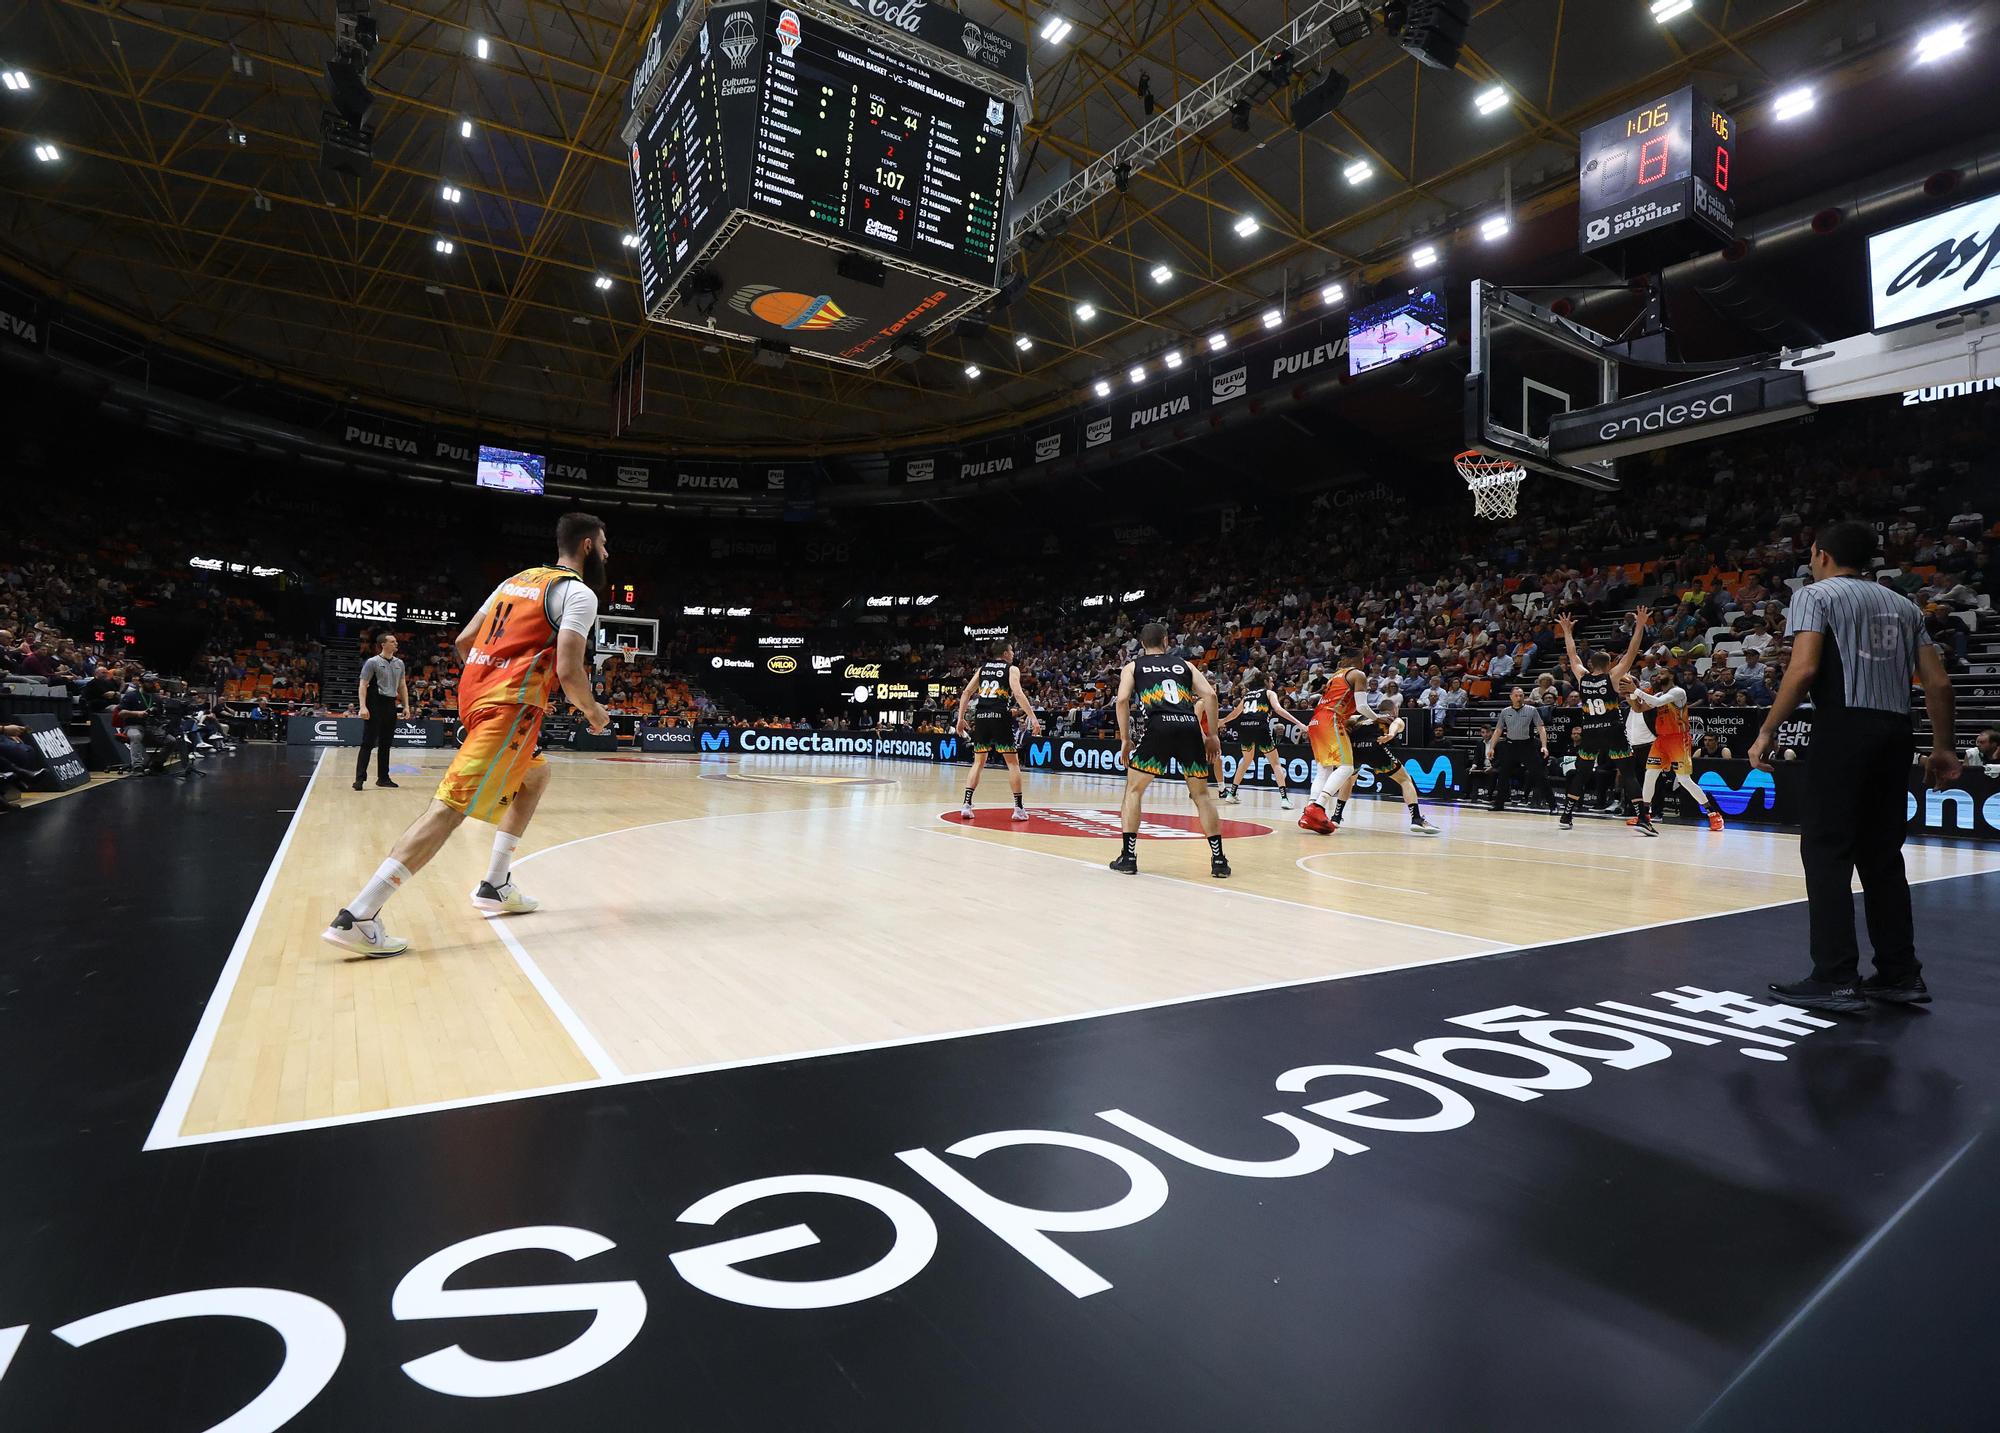 Valencia Basket - Surne Bilbao Basket